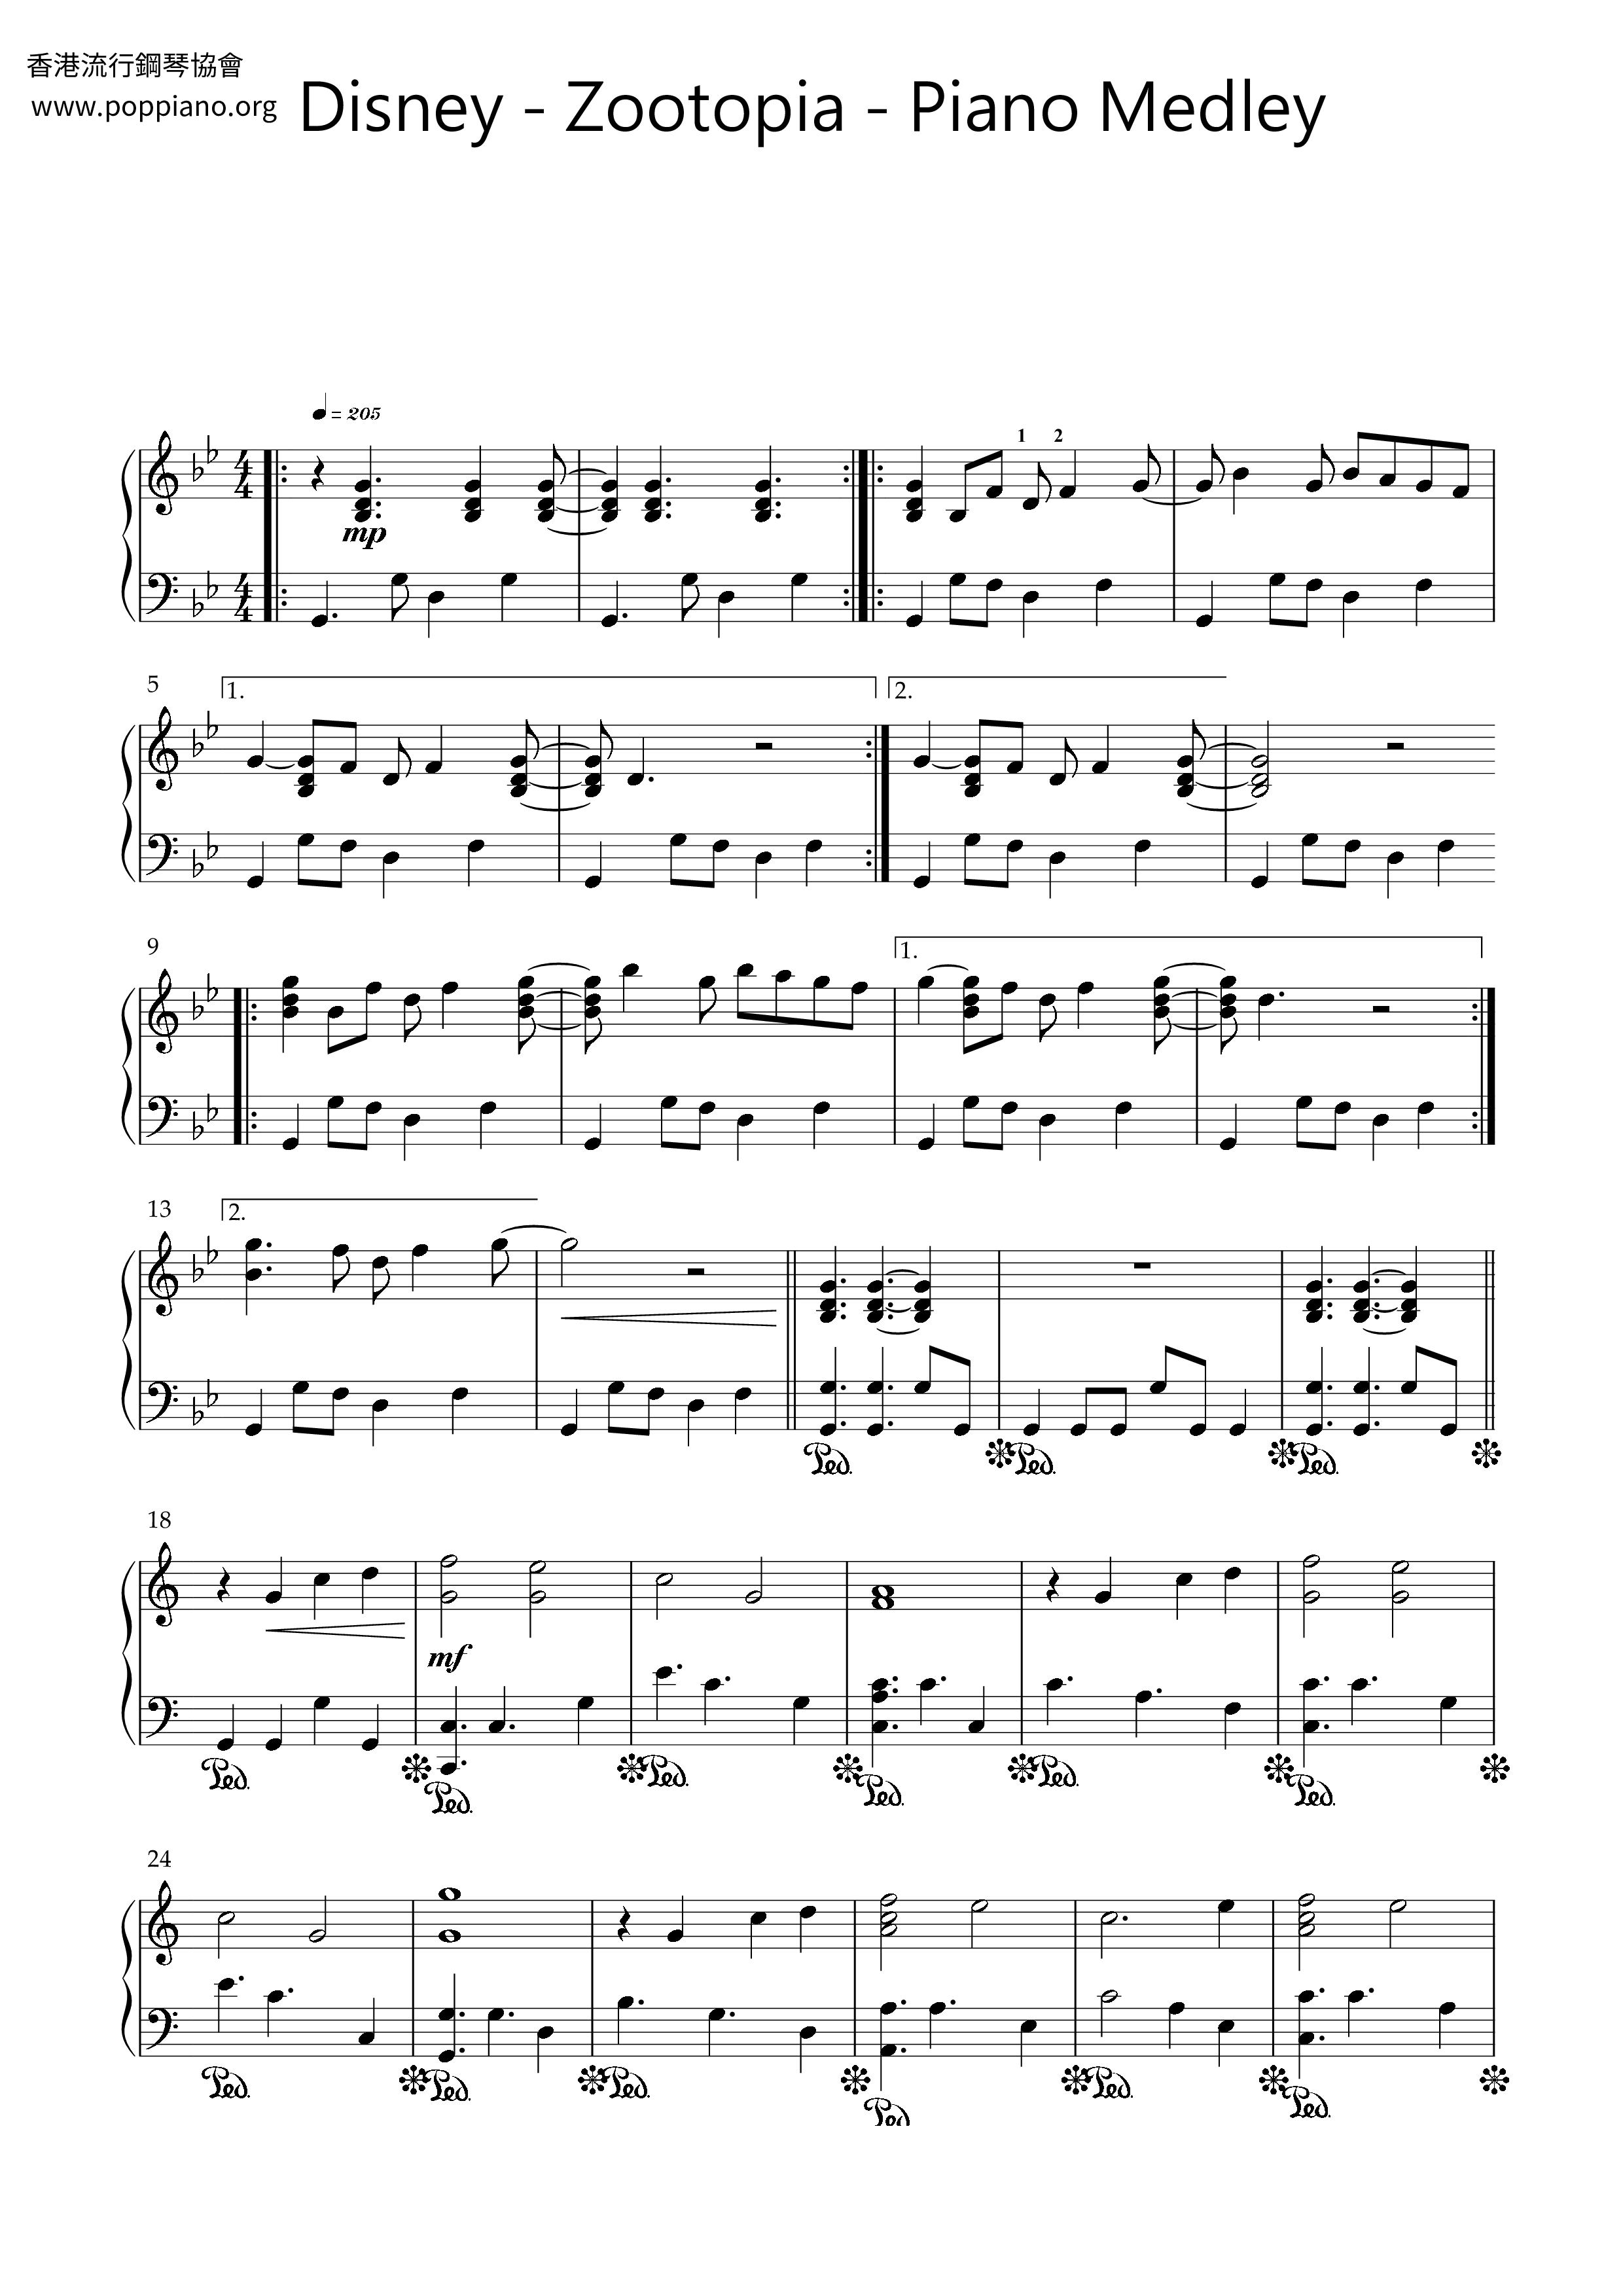 Zootopia - Piano Medley Score